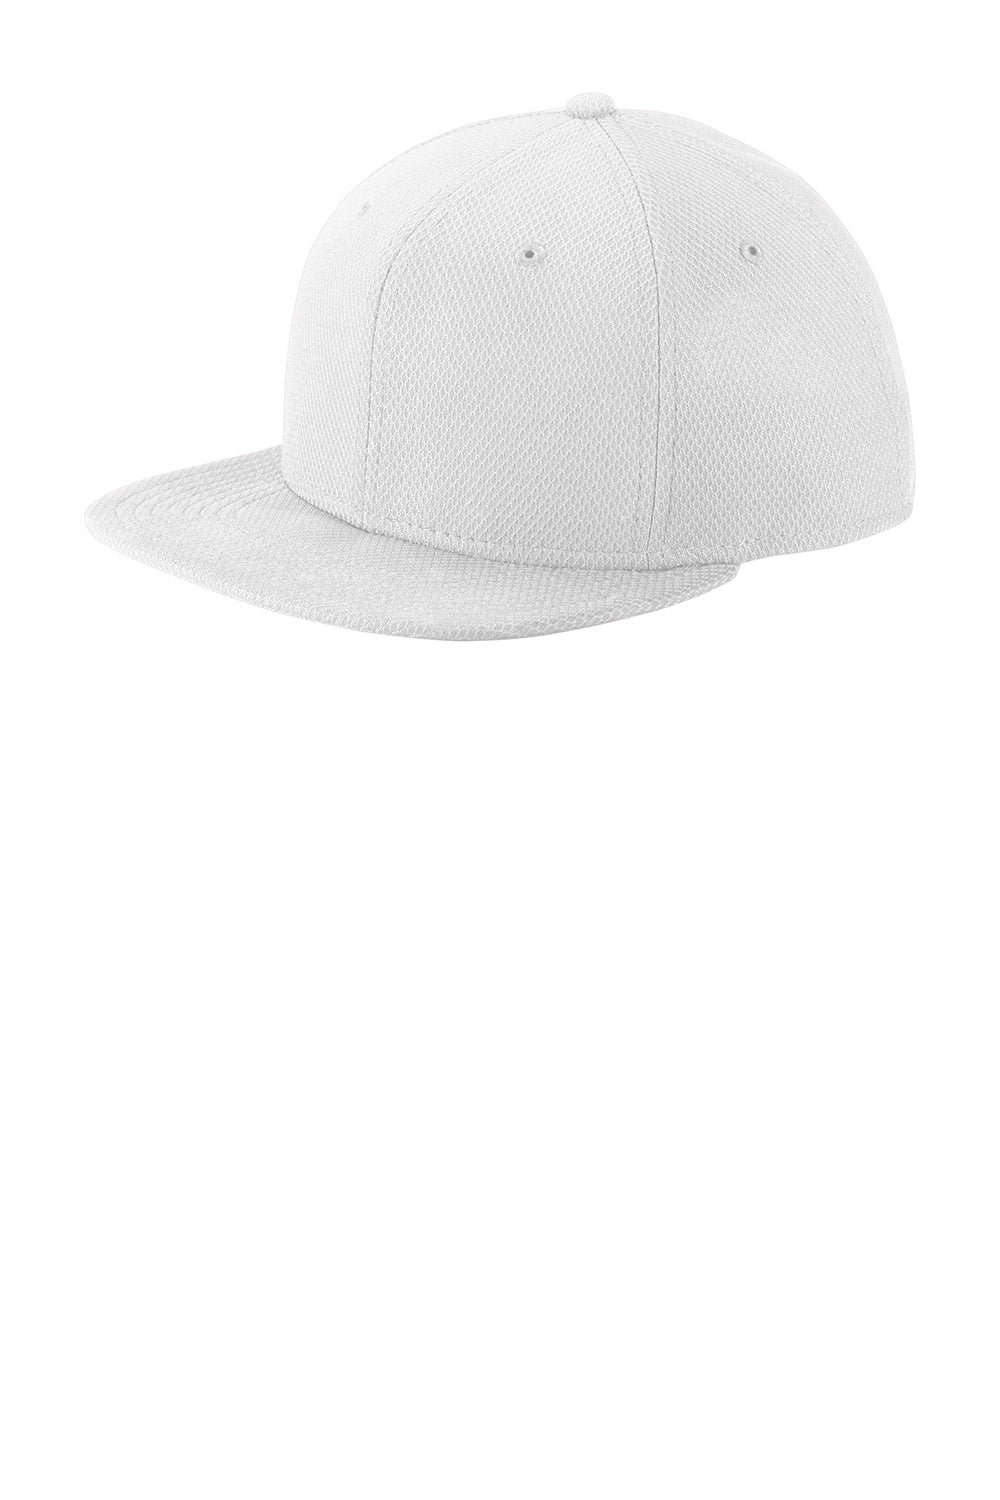 New Era NE404 Mens Moisture Wicking Adjustable Hat White Front